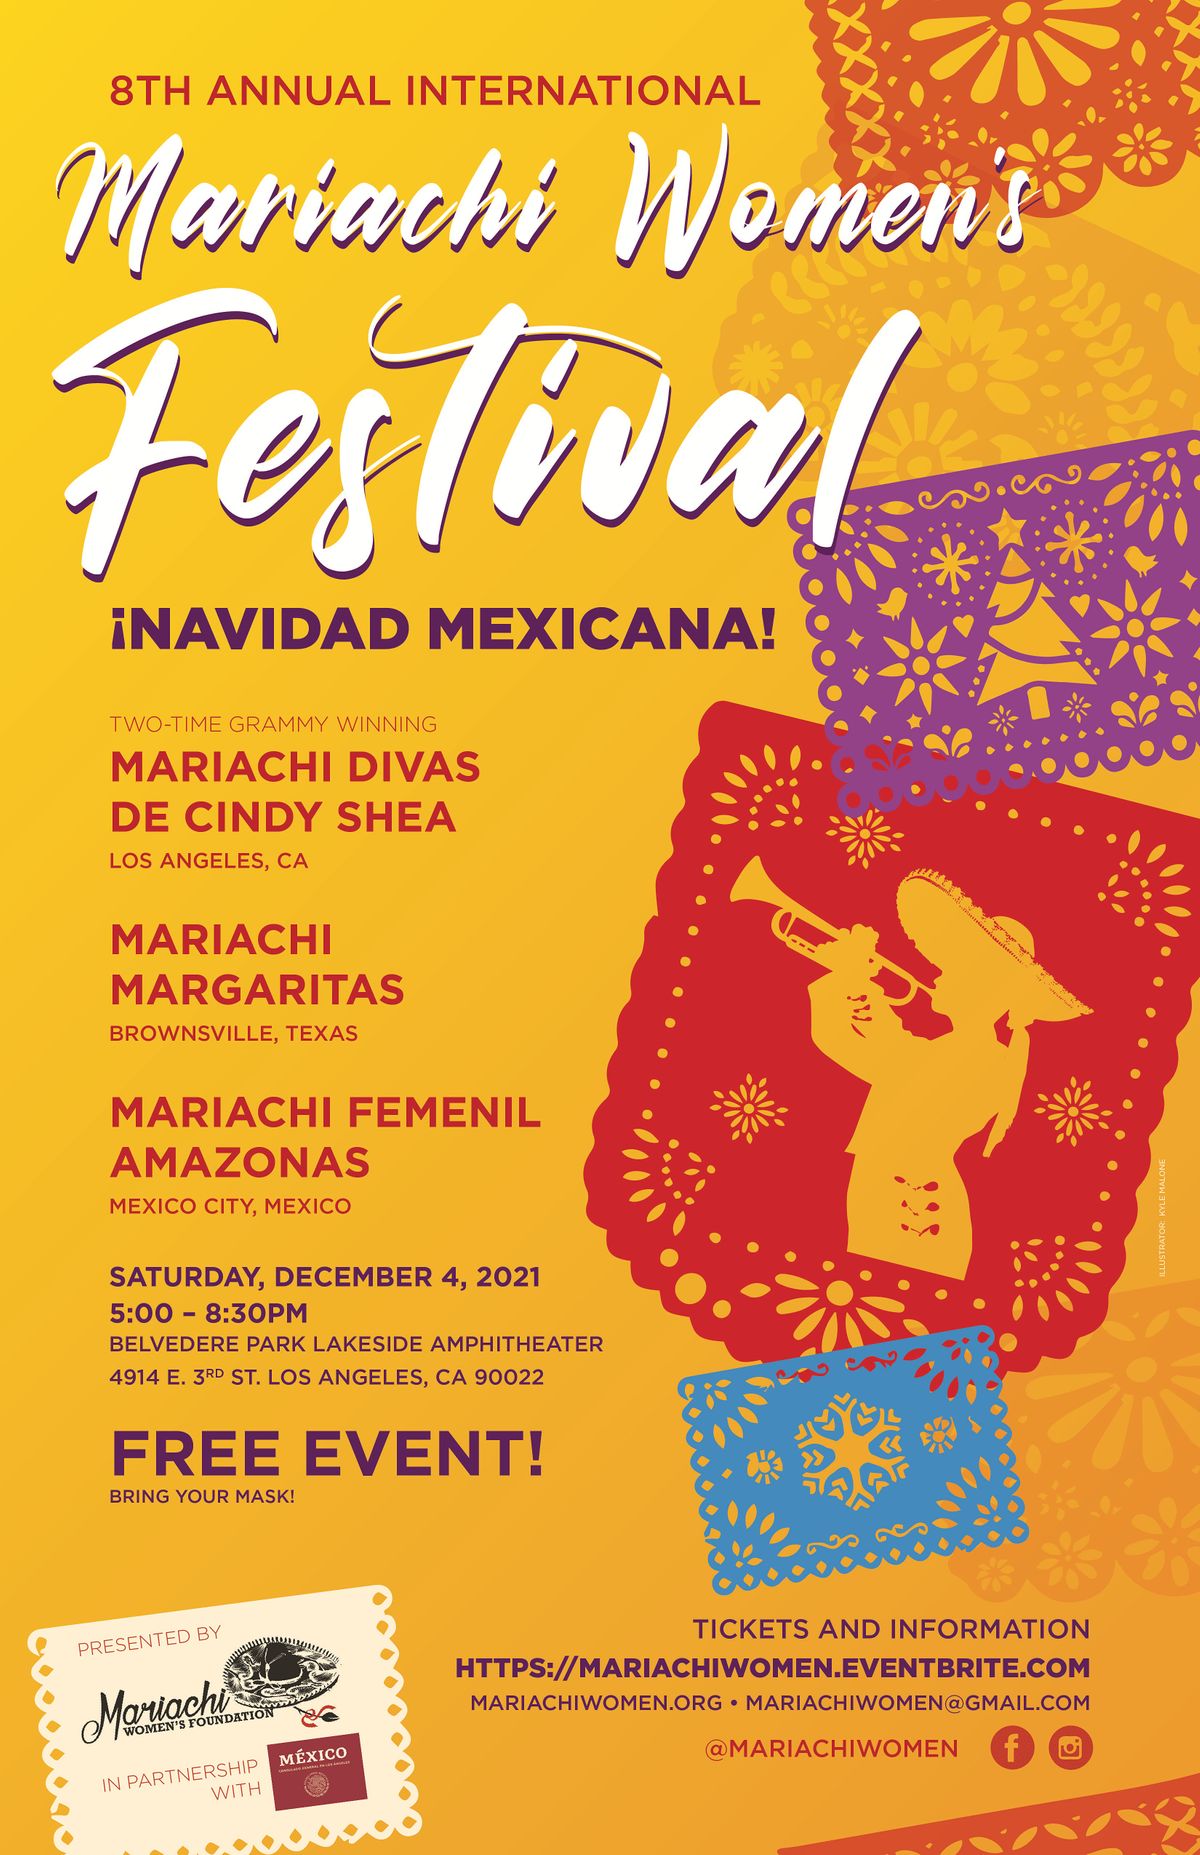 8th Annual International Mariachi Women's Festival